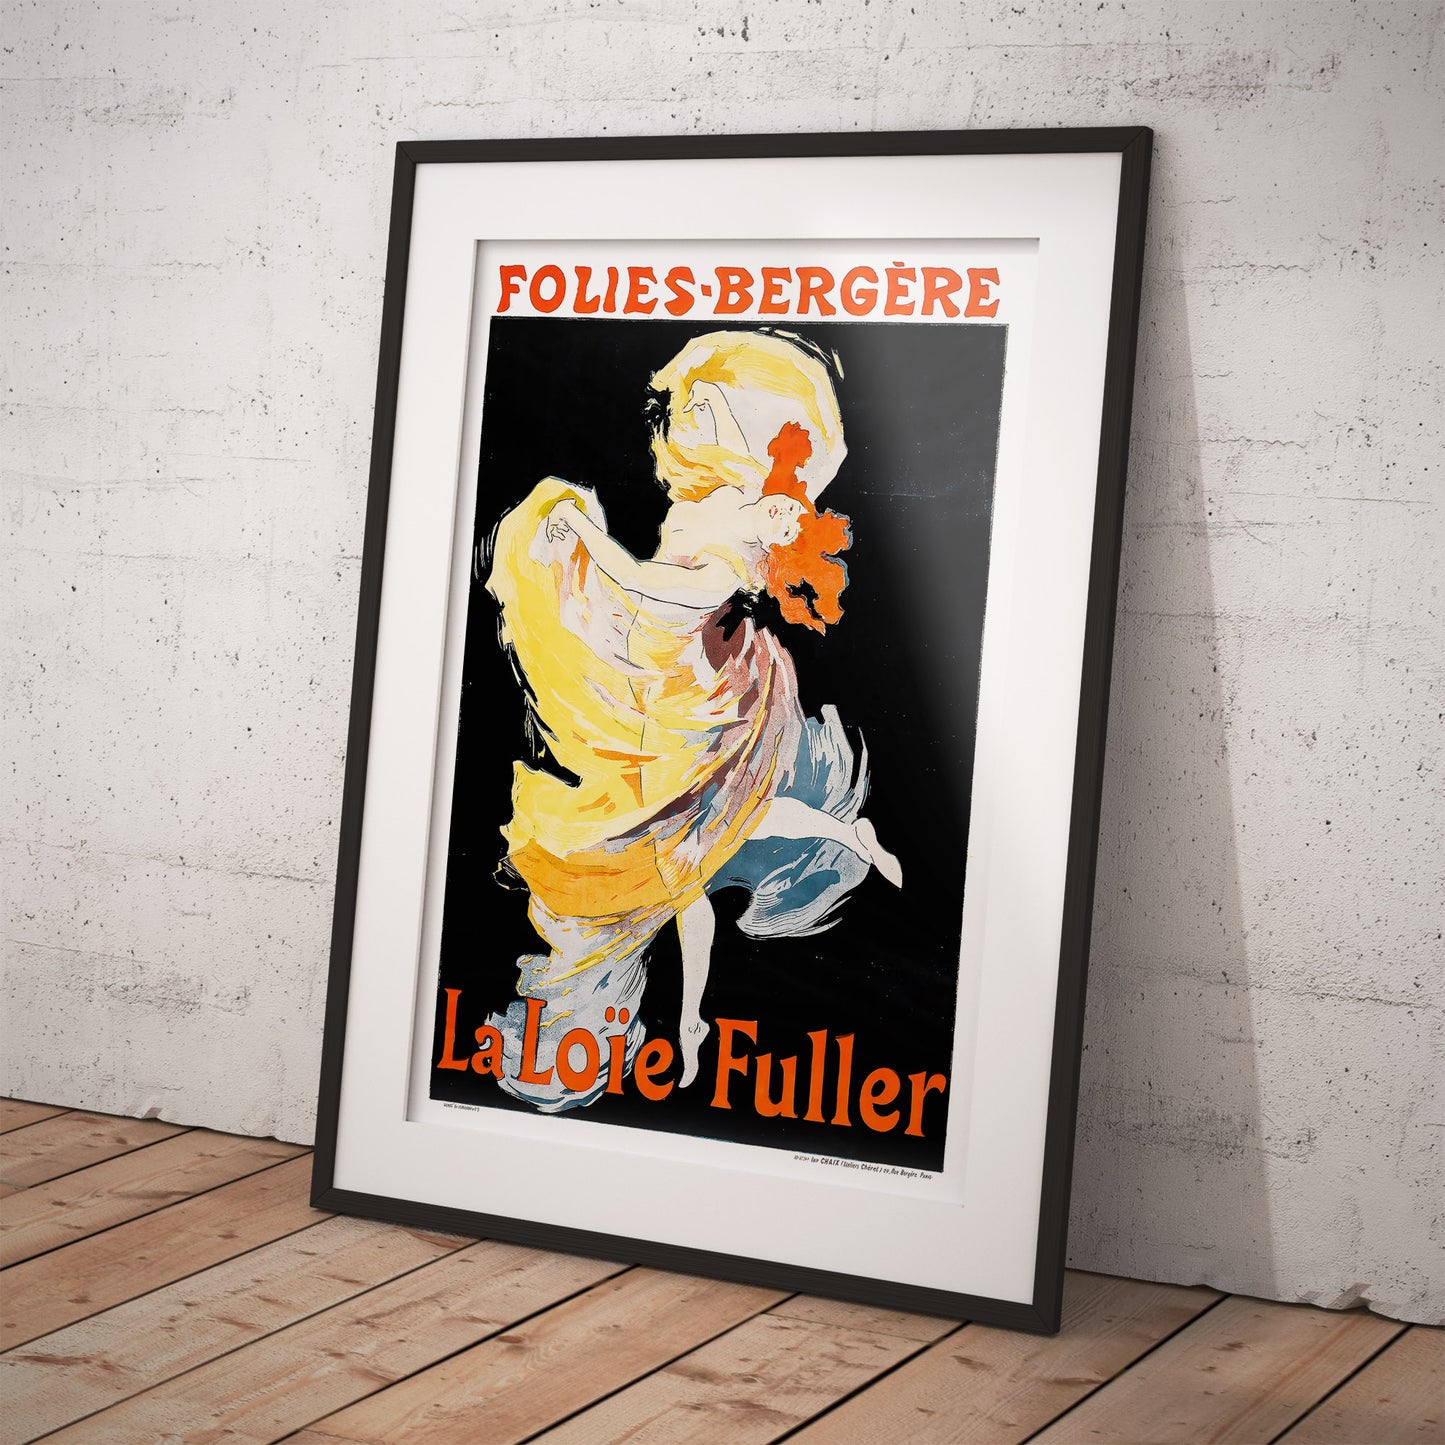 Folies Berger: La Loïe Fuller by Jules Chéret - Theatrical advertisement seen on Friends tv show